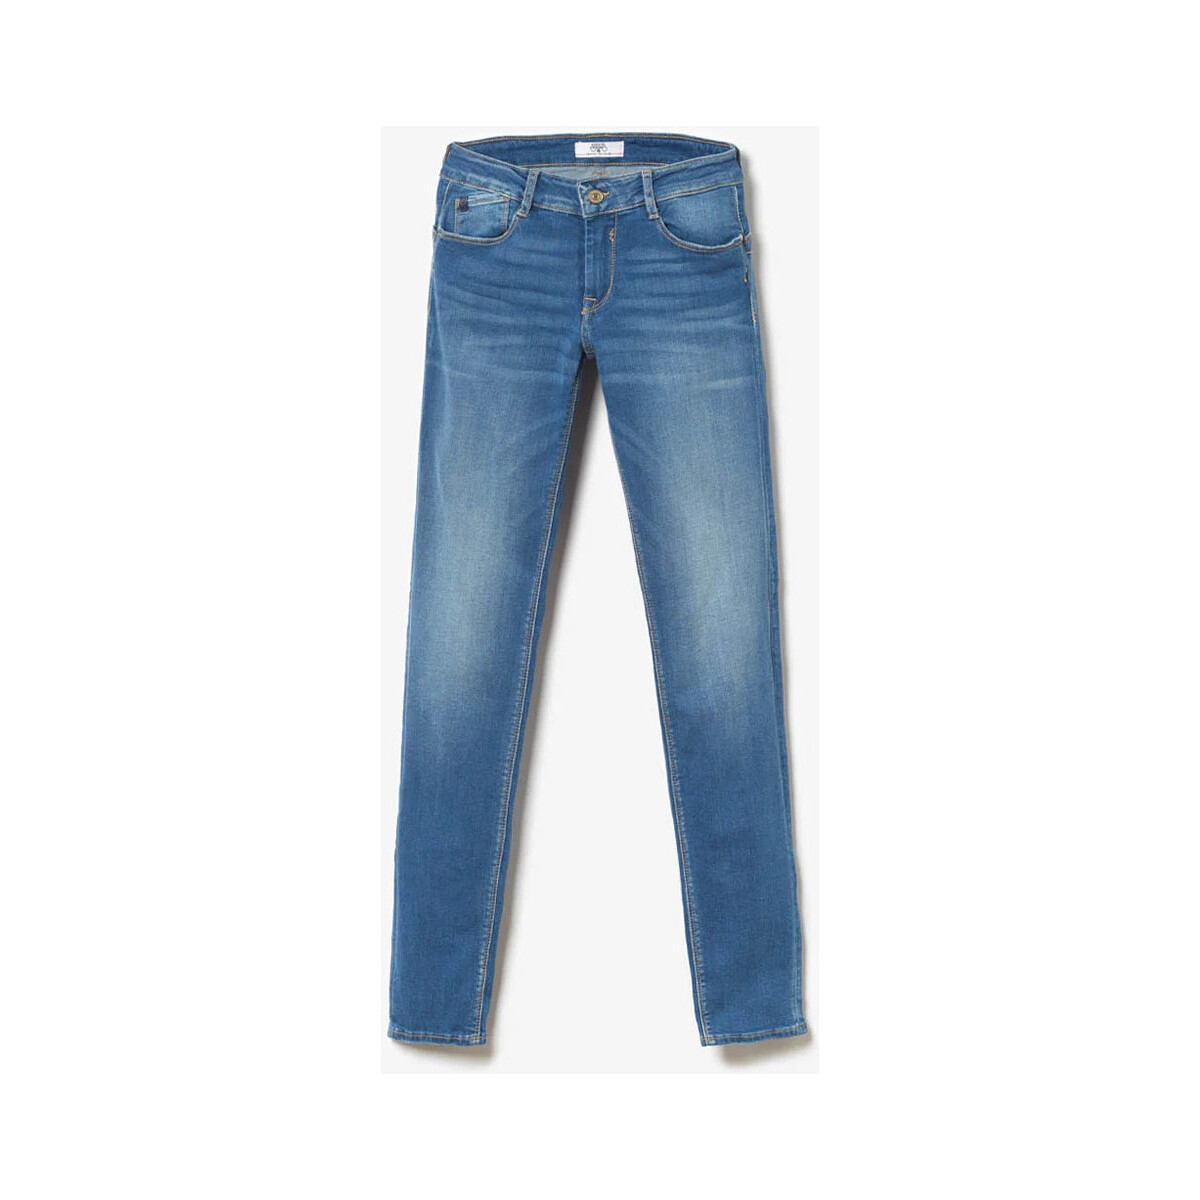 Le Temps des Cerises Bleu Neff pulp slim jeans bleu LjVYoTYn